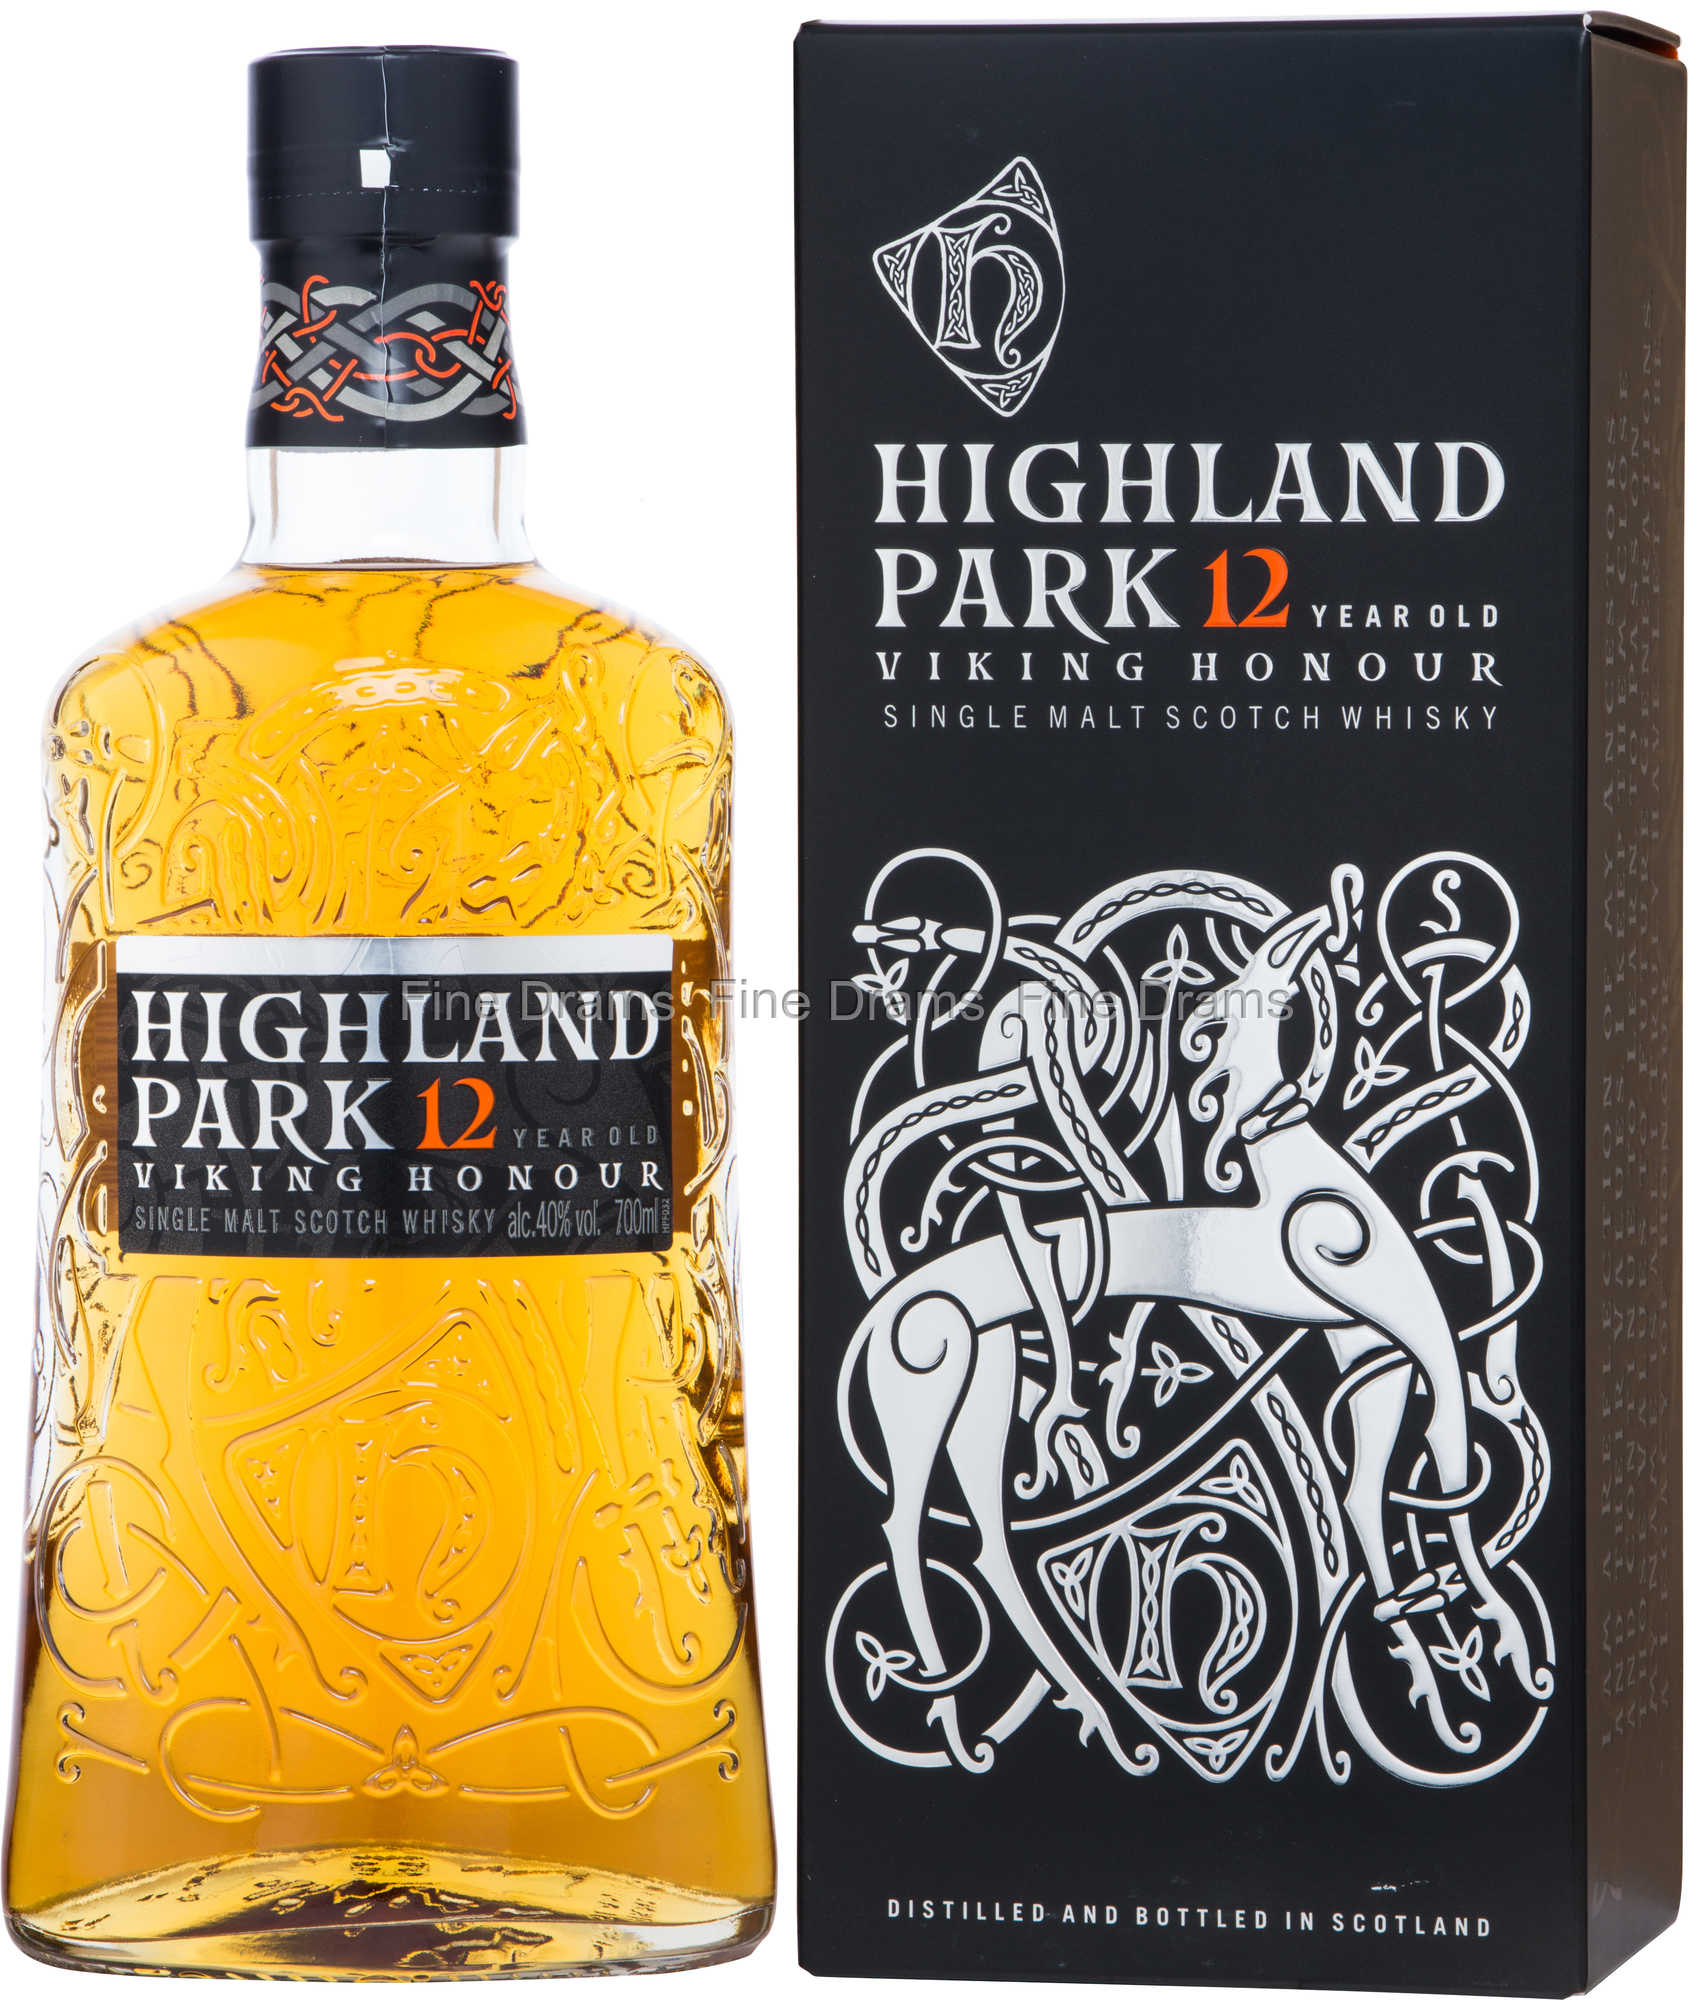 Highland Park 12 Year Old Whisky - Viking Honour